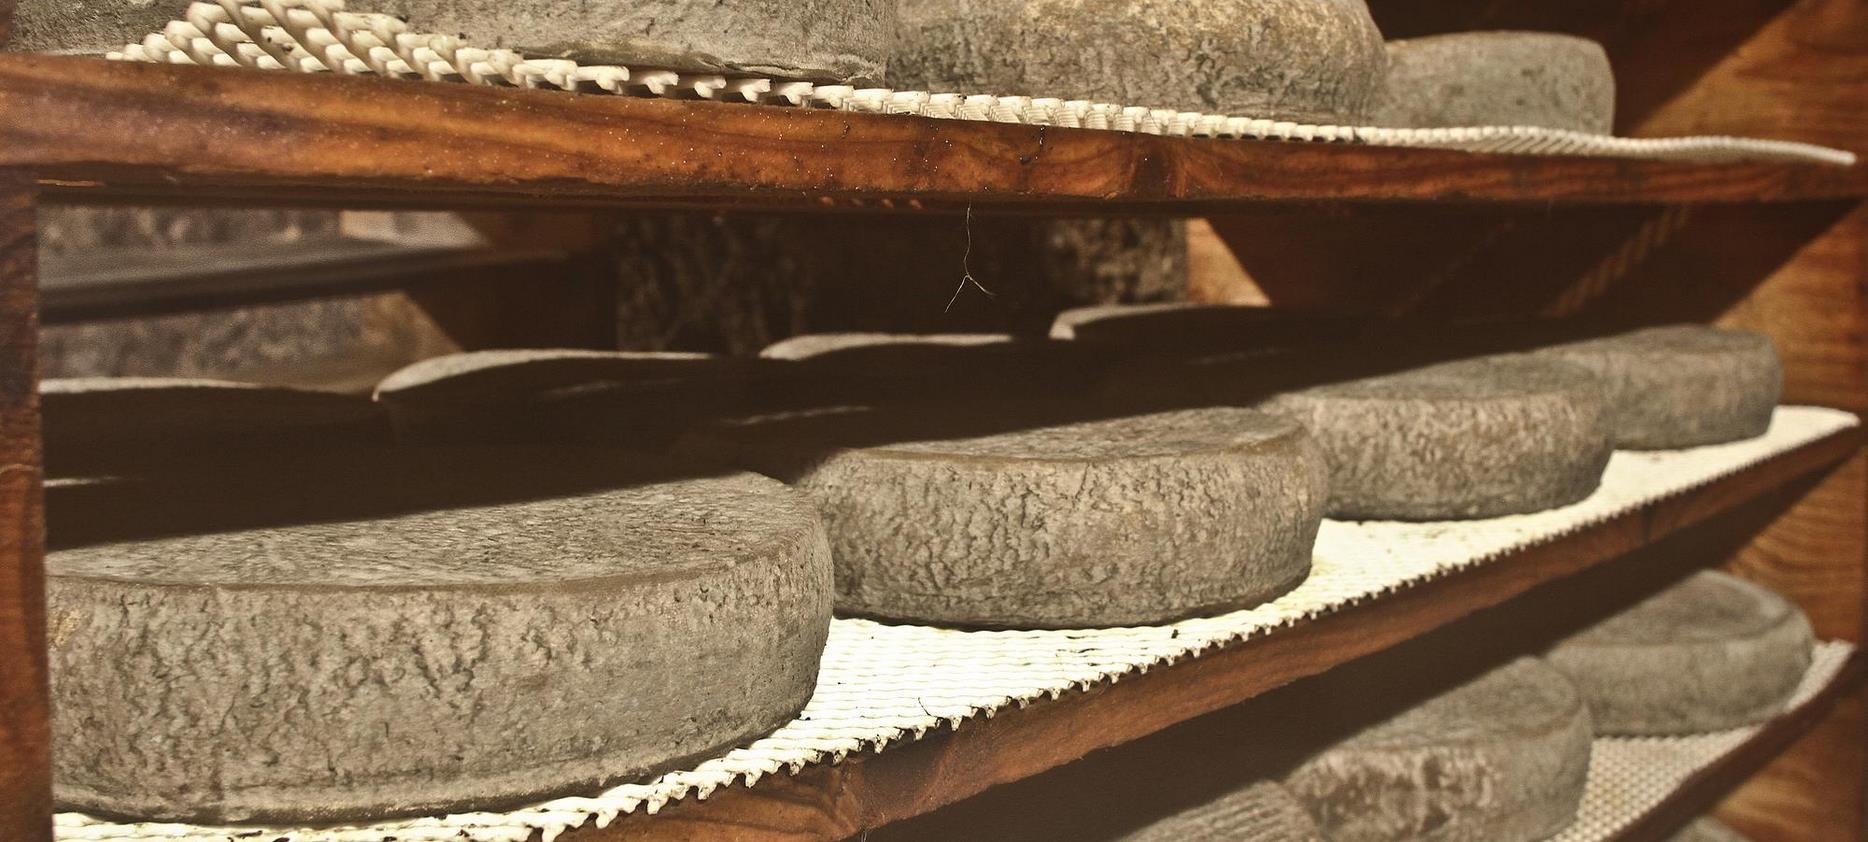 AOP Auvergne cheese - refining cellar of Saint Nectaire farmer